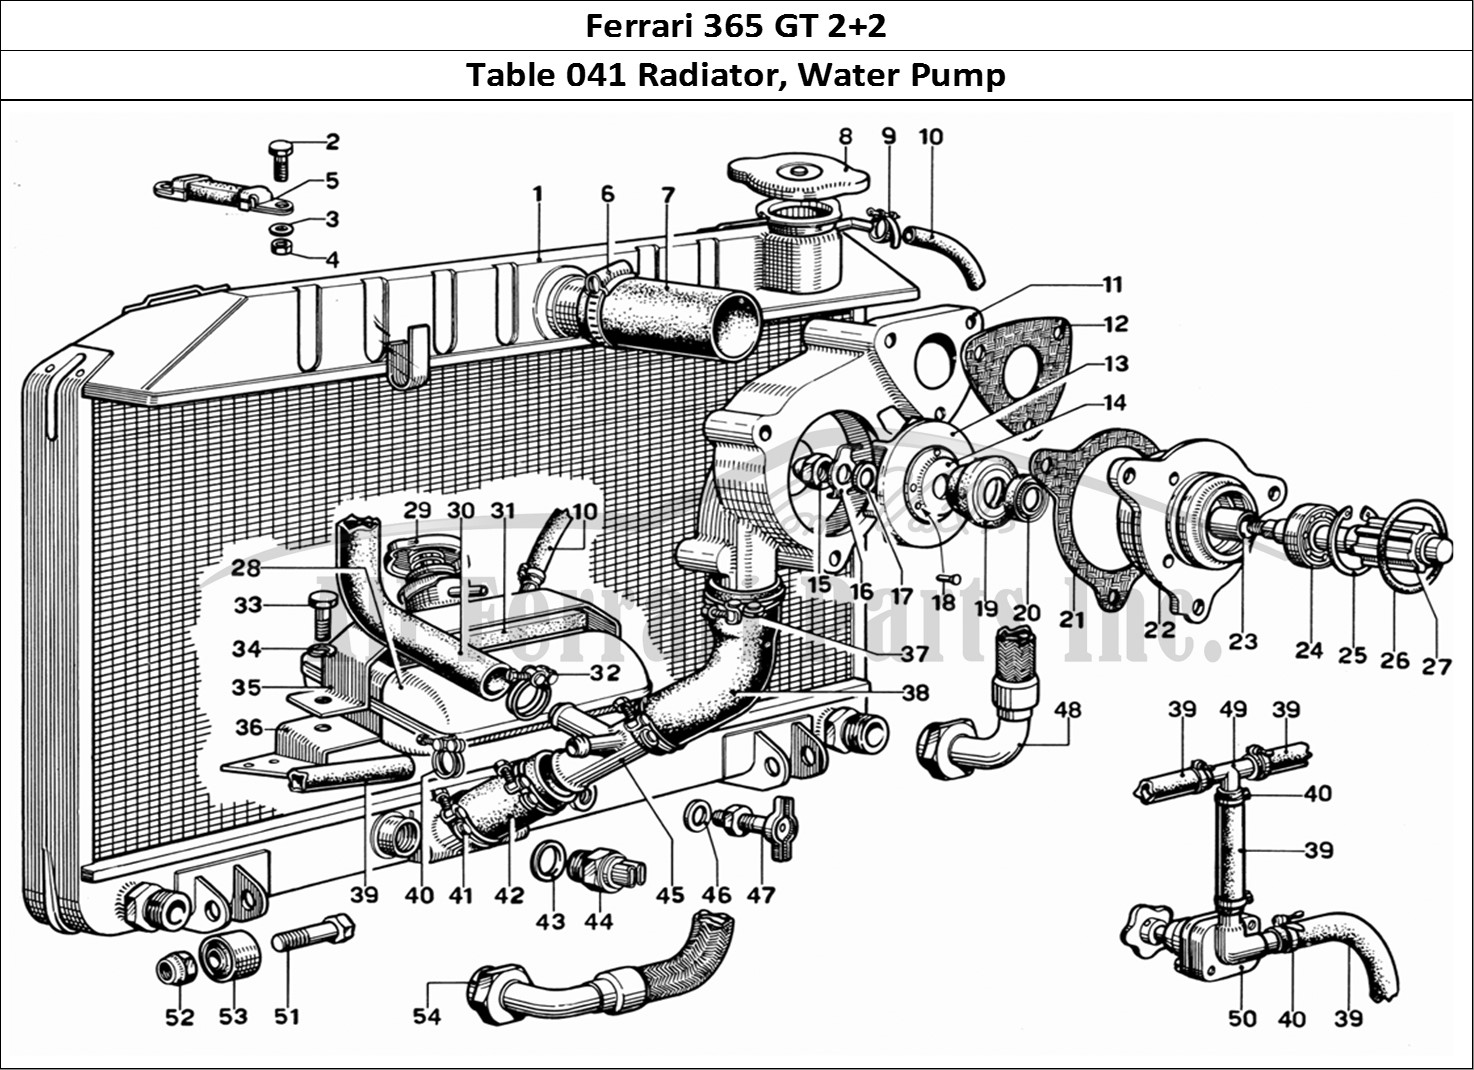 Ferrari Parts Ferrari 365 GT 2+2 (Mechanical) Page 041 Radiator and Water Pump